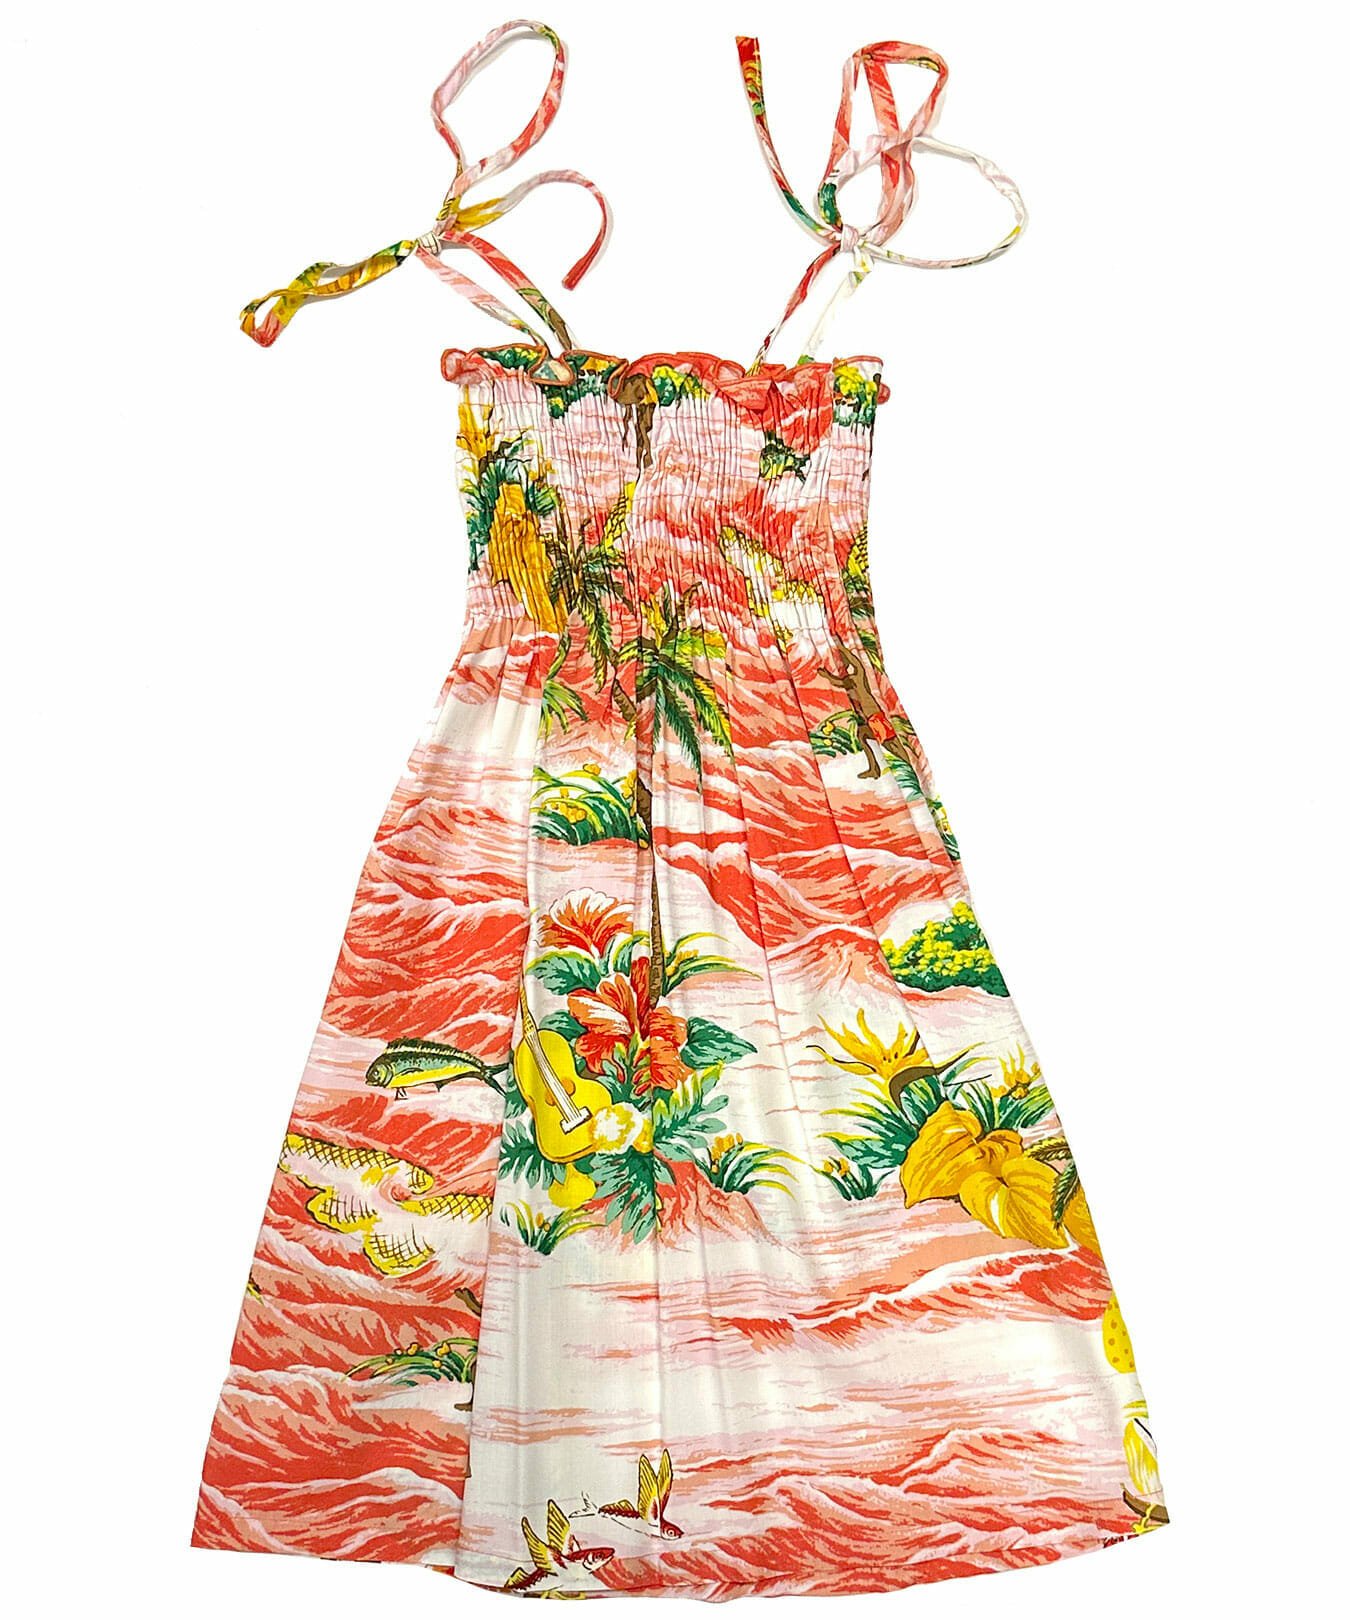 Pali Girls Smock Top Rayon Dress Coral